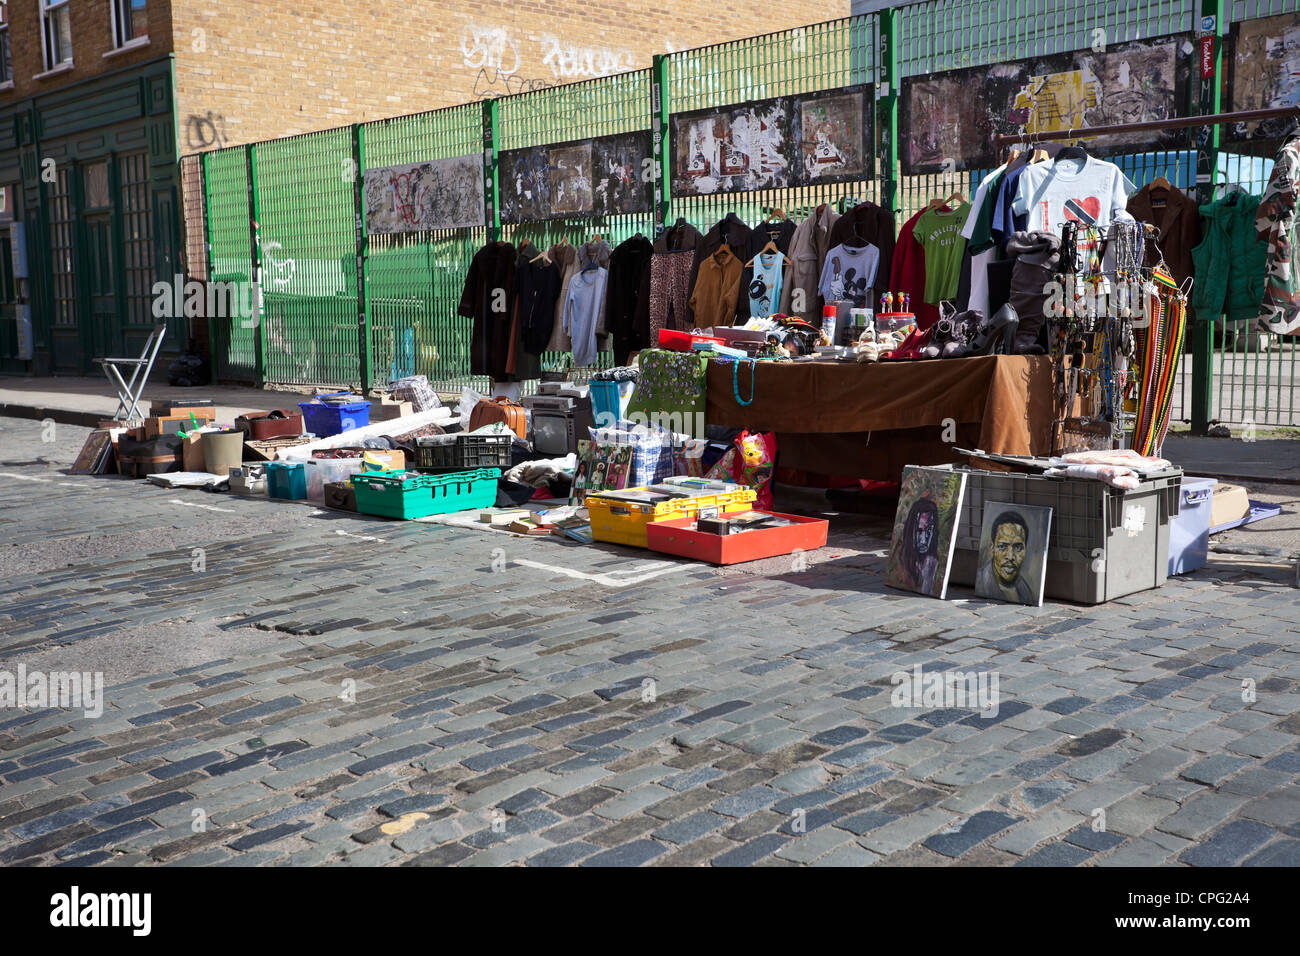 Brick Lane market stall on the street, Spitalfields, London, England, UK. Stock Photo